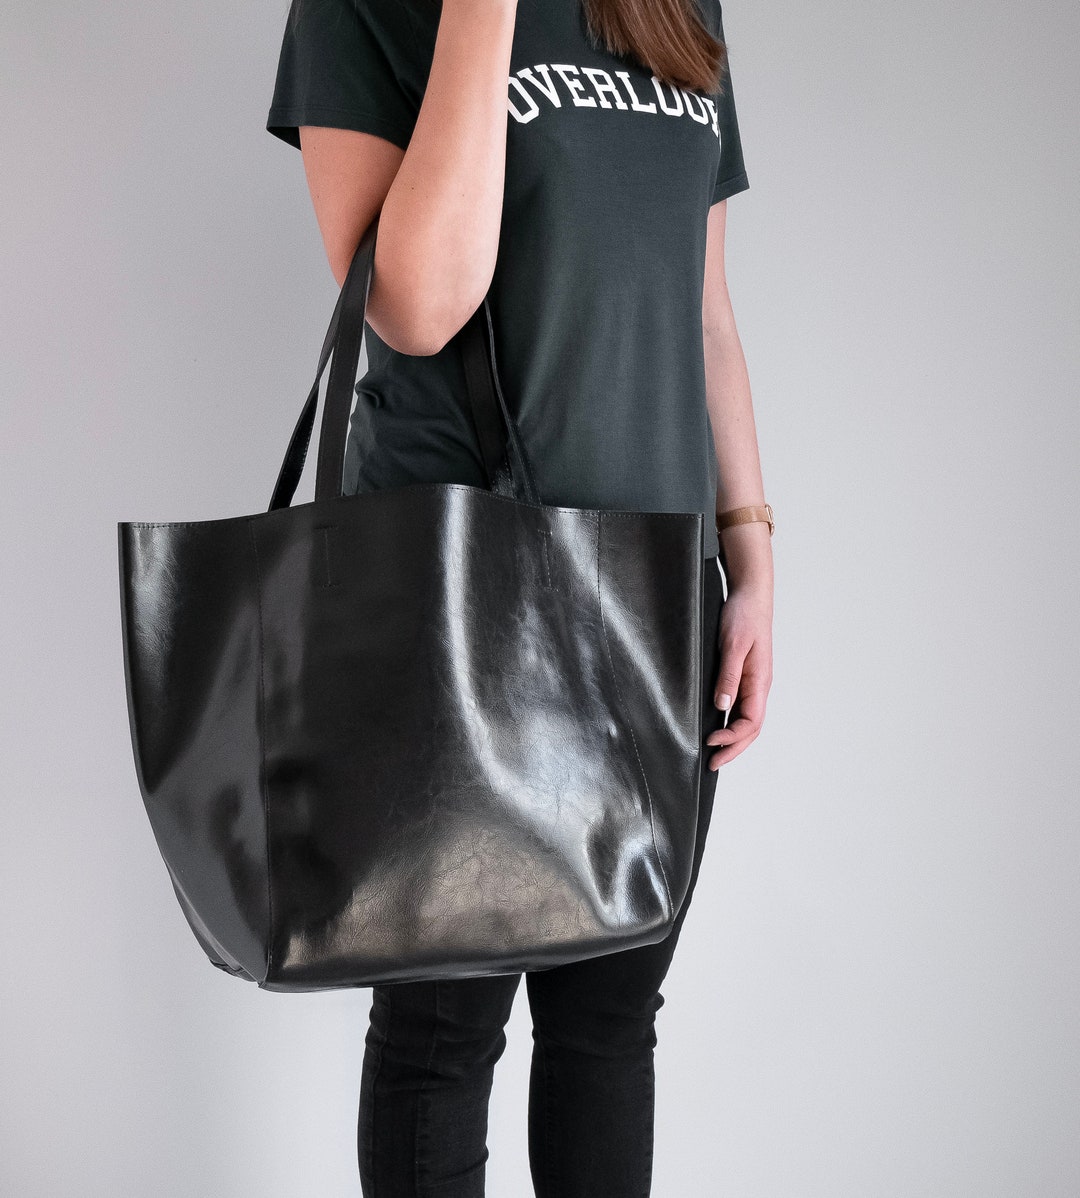 OVERSIZED Tote Bag BLACK Leather Shopper Leather Handbag - Etsy